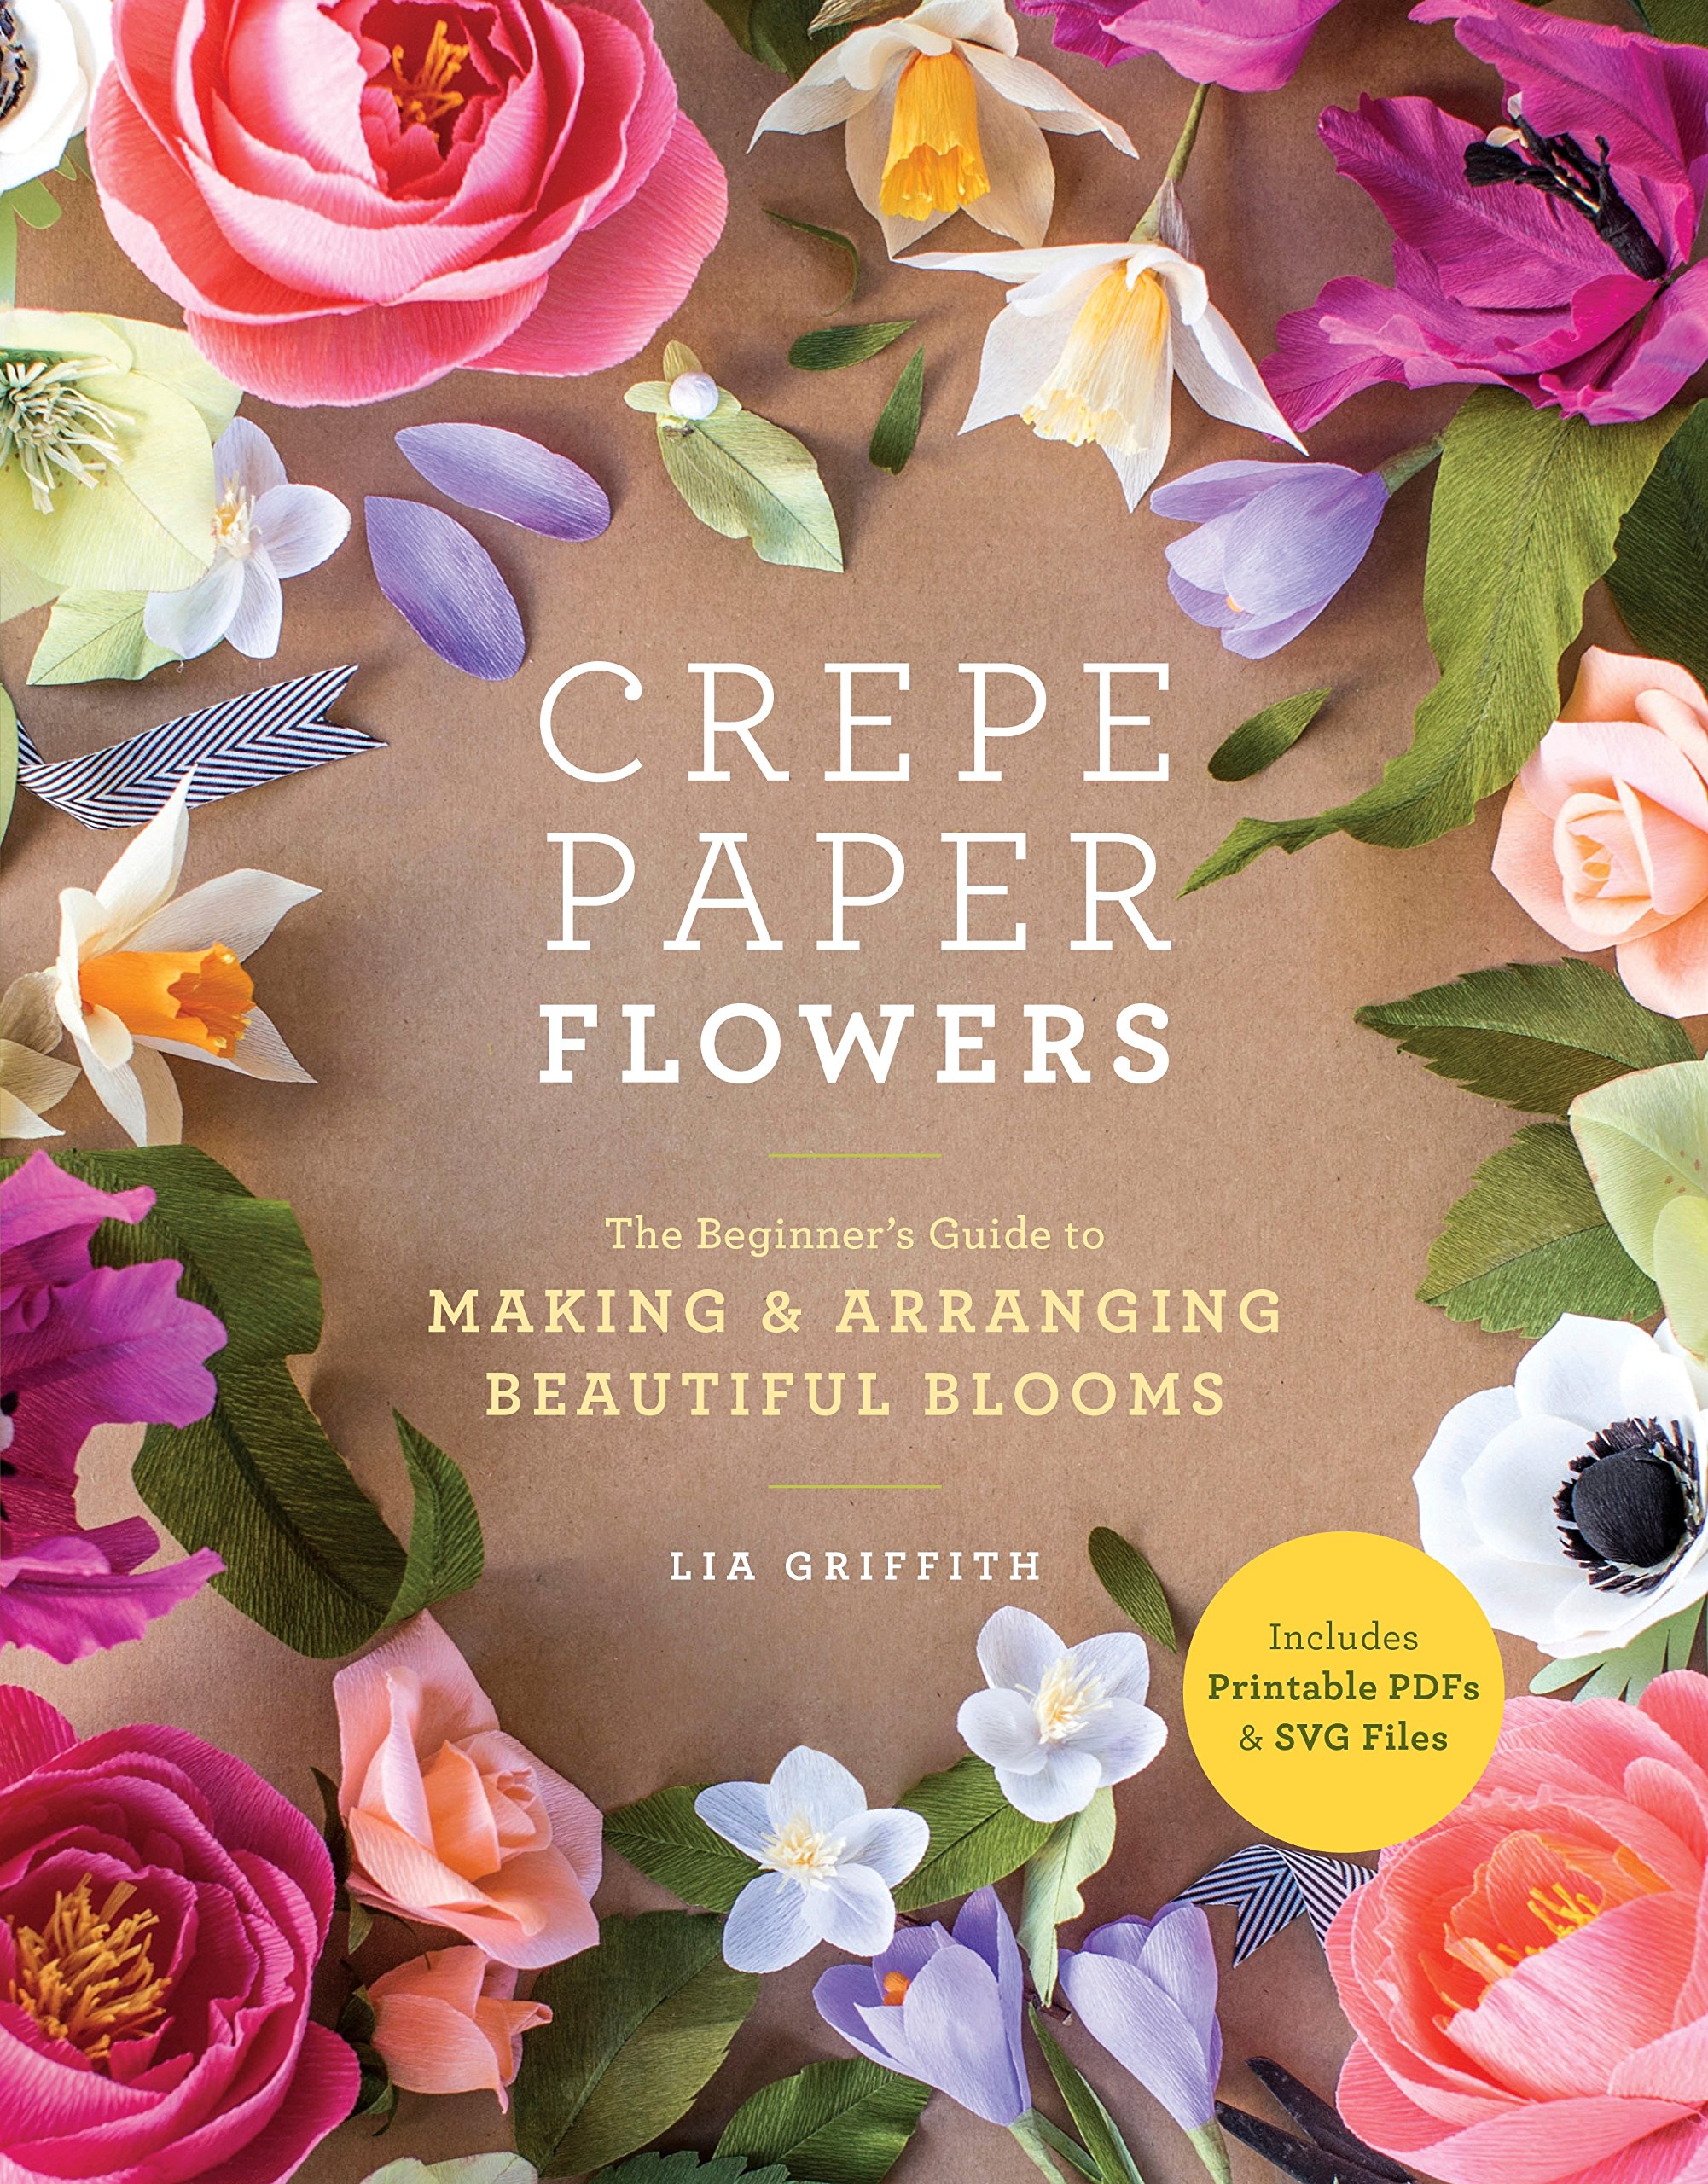 Crepe-Paper Flowers